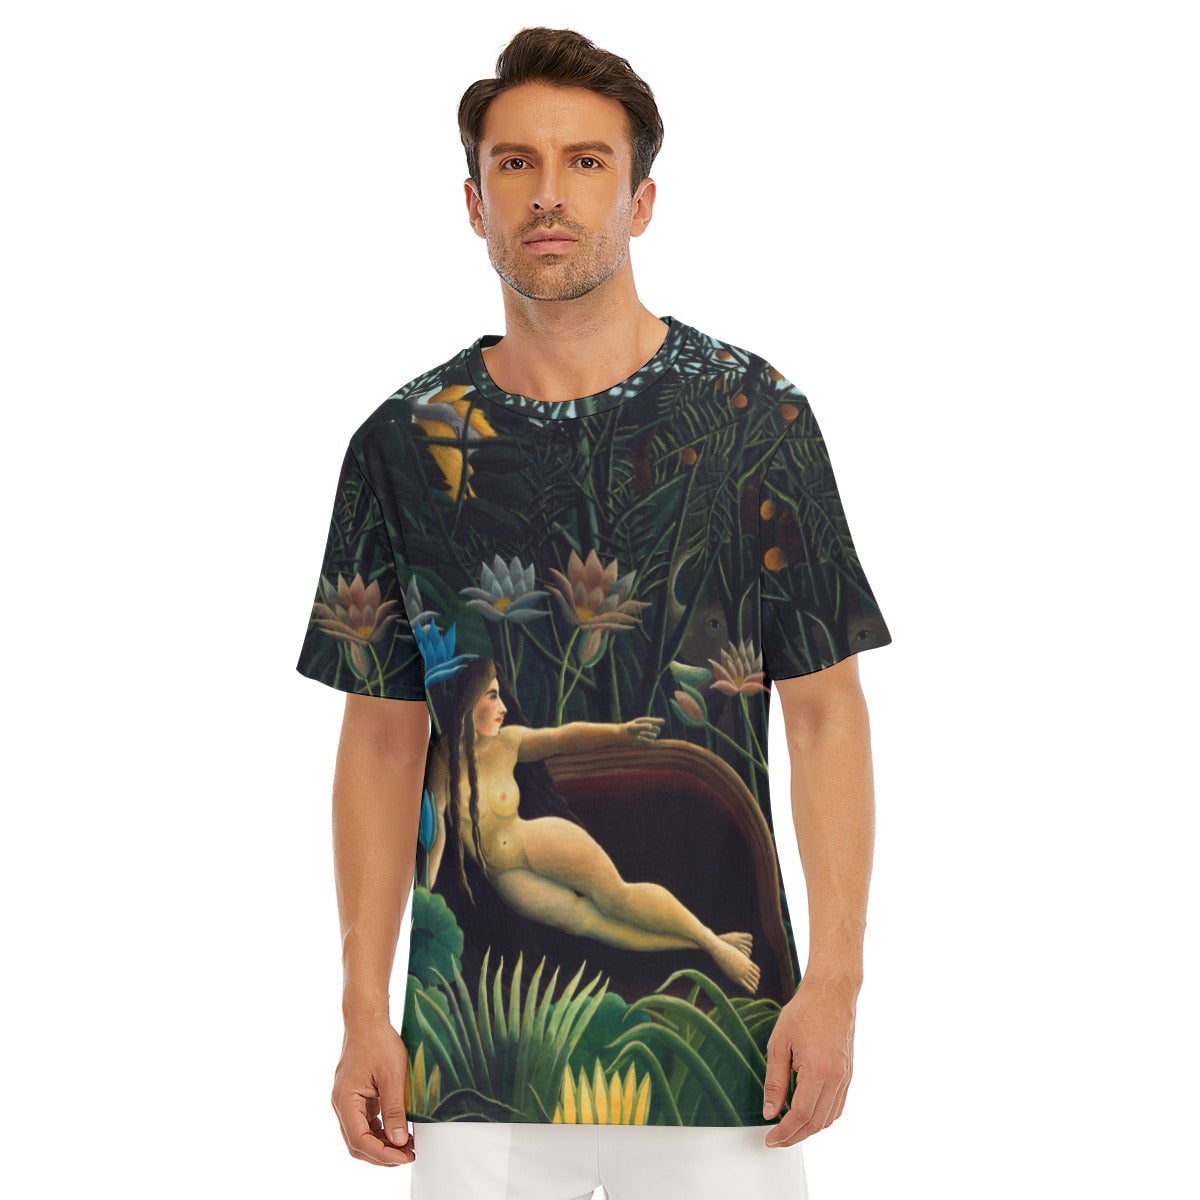 Henri Rousseau’s The Dream T-Shirt